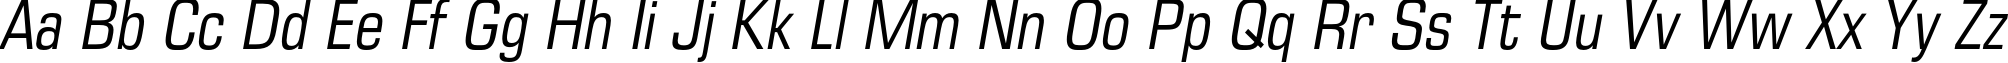 Пример написания английского алфавита шрифтом EuropeCond Italic